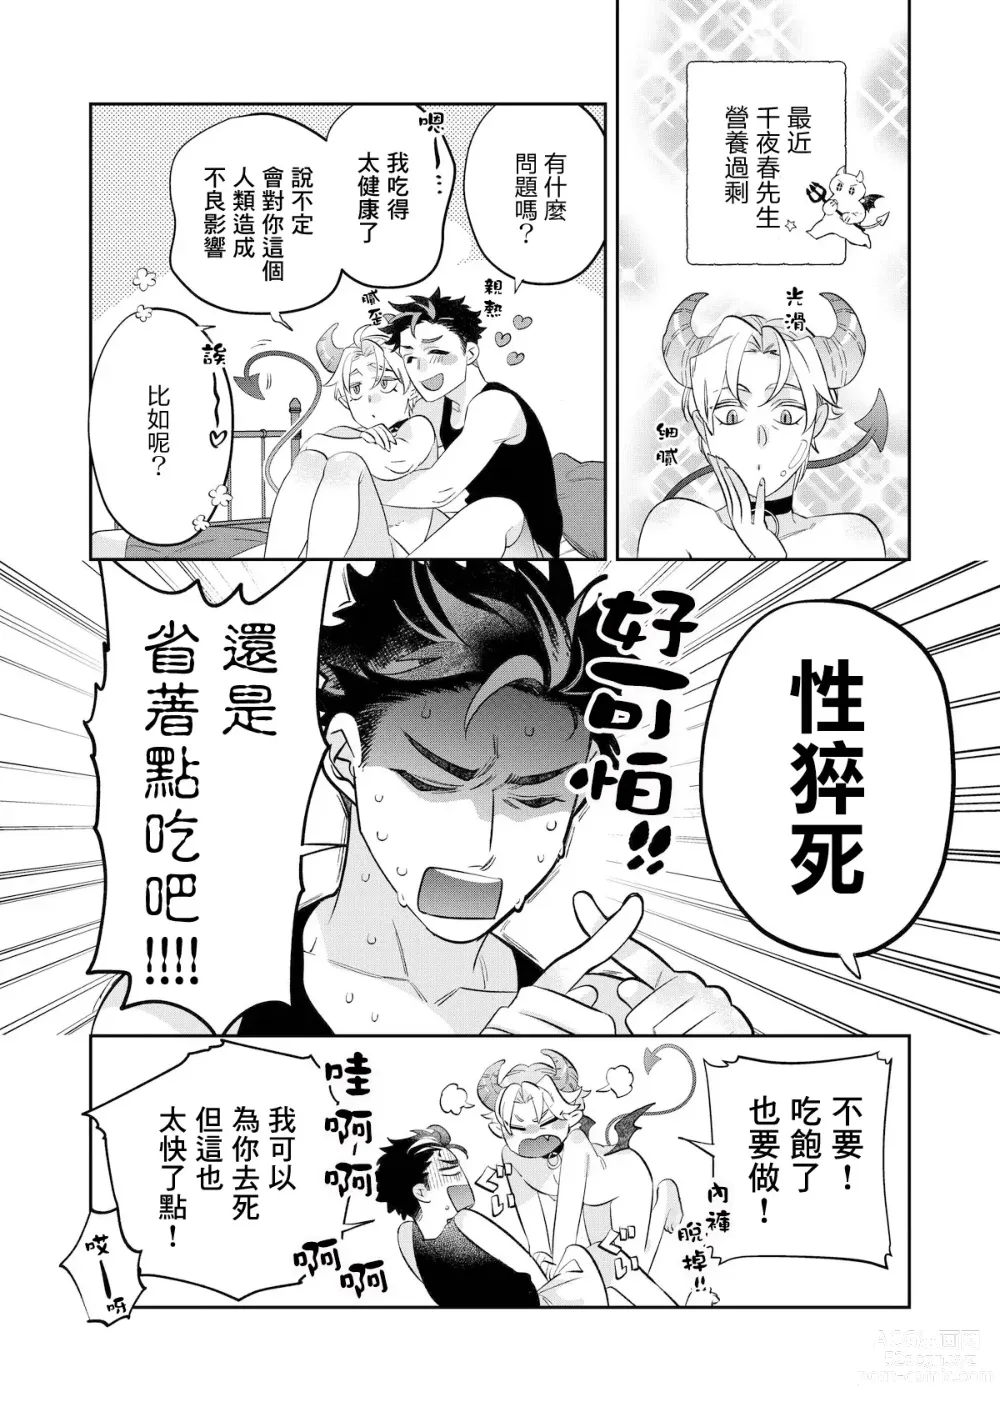 Page 3 of manga 心爱的退役×阳痿×淫魔前辈, 让我来治好你吧? 番外